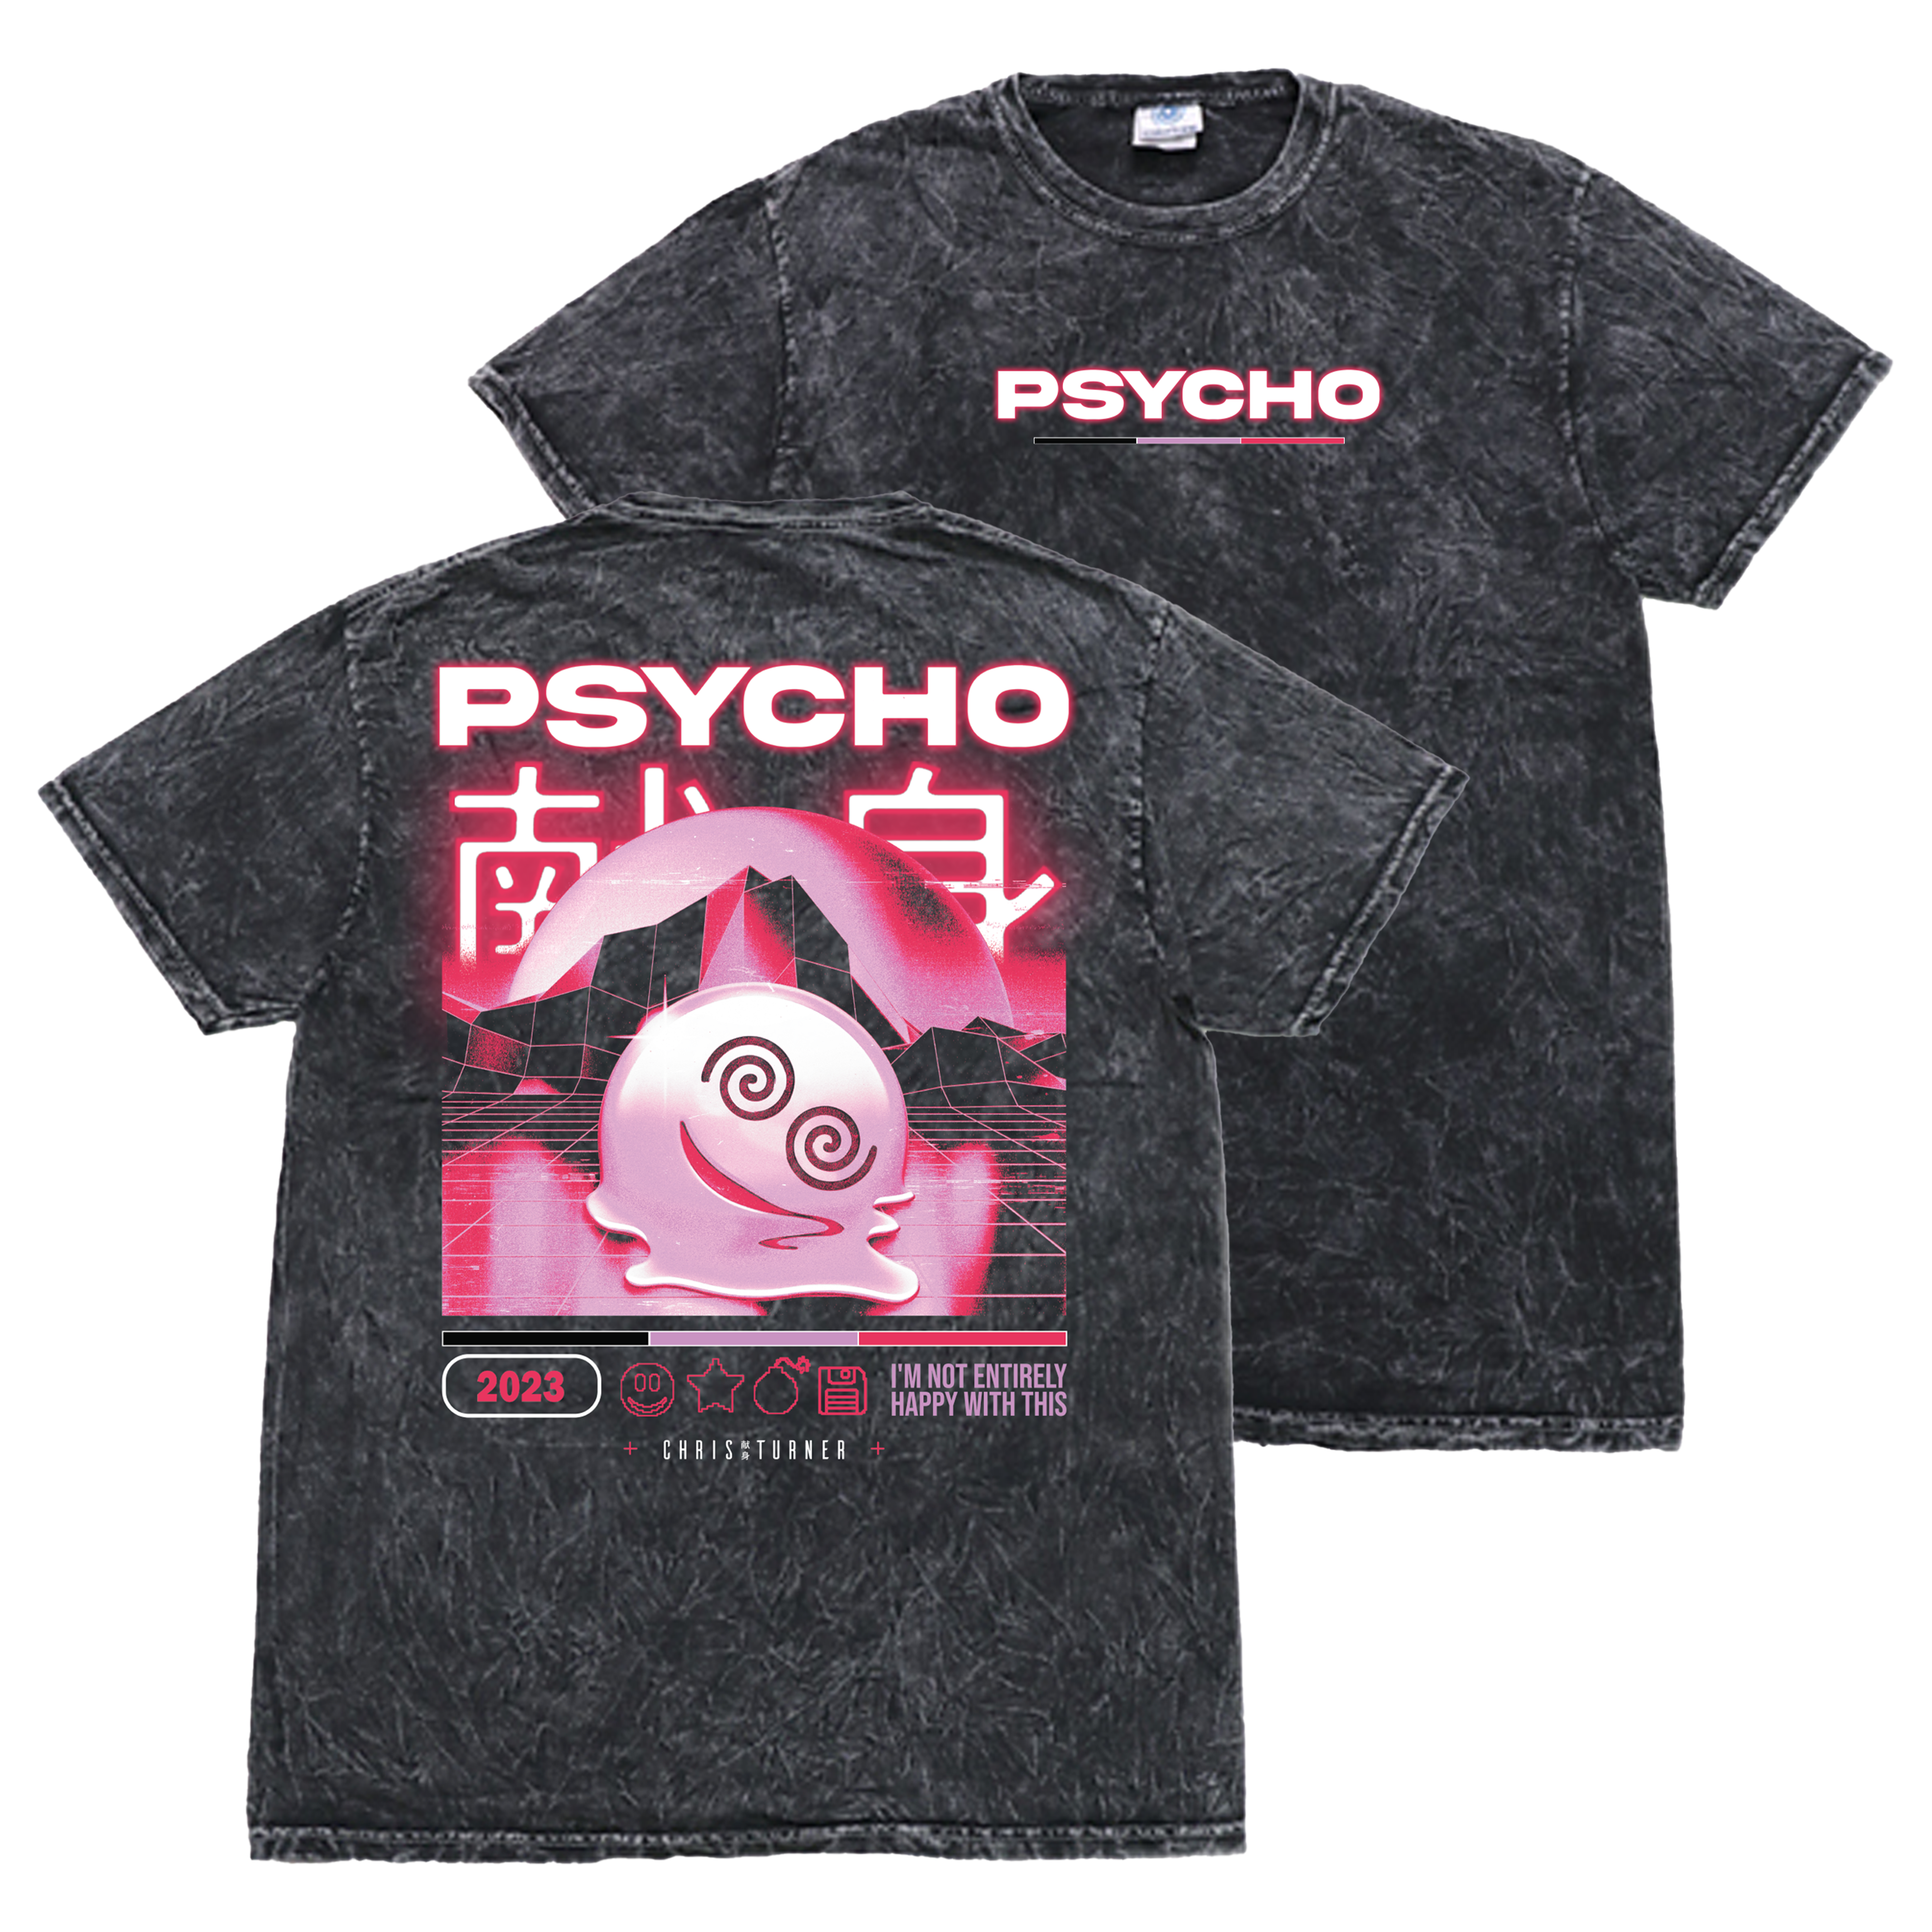 Chris Turner - Not Happy Psycho T-Shirt